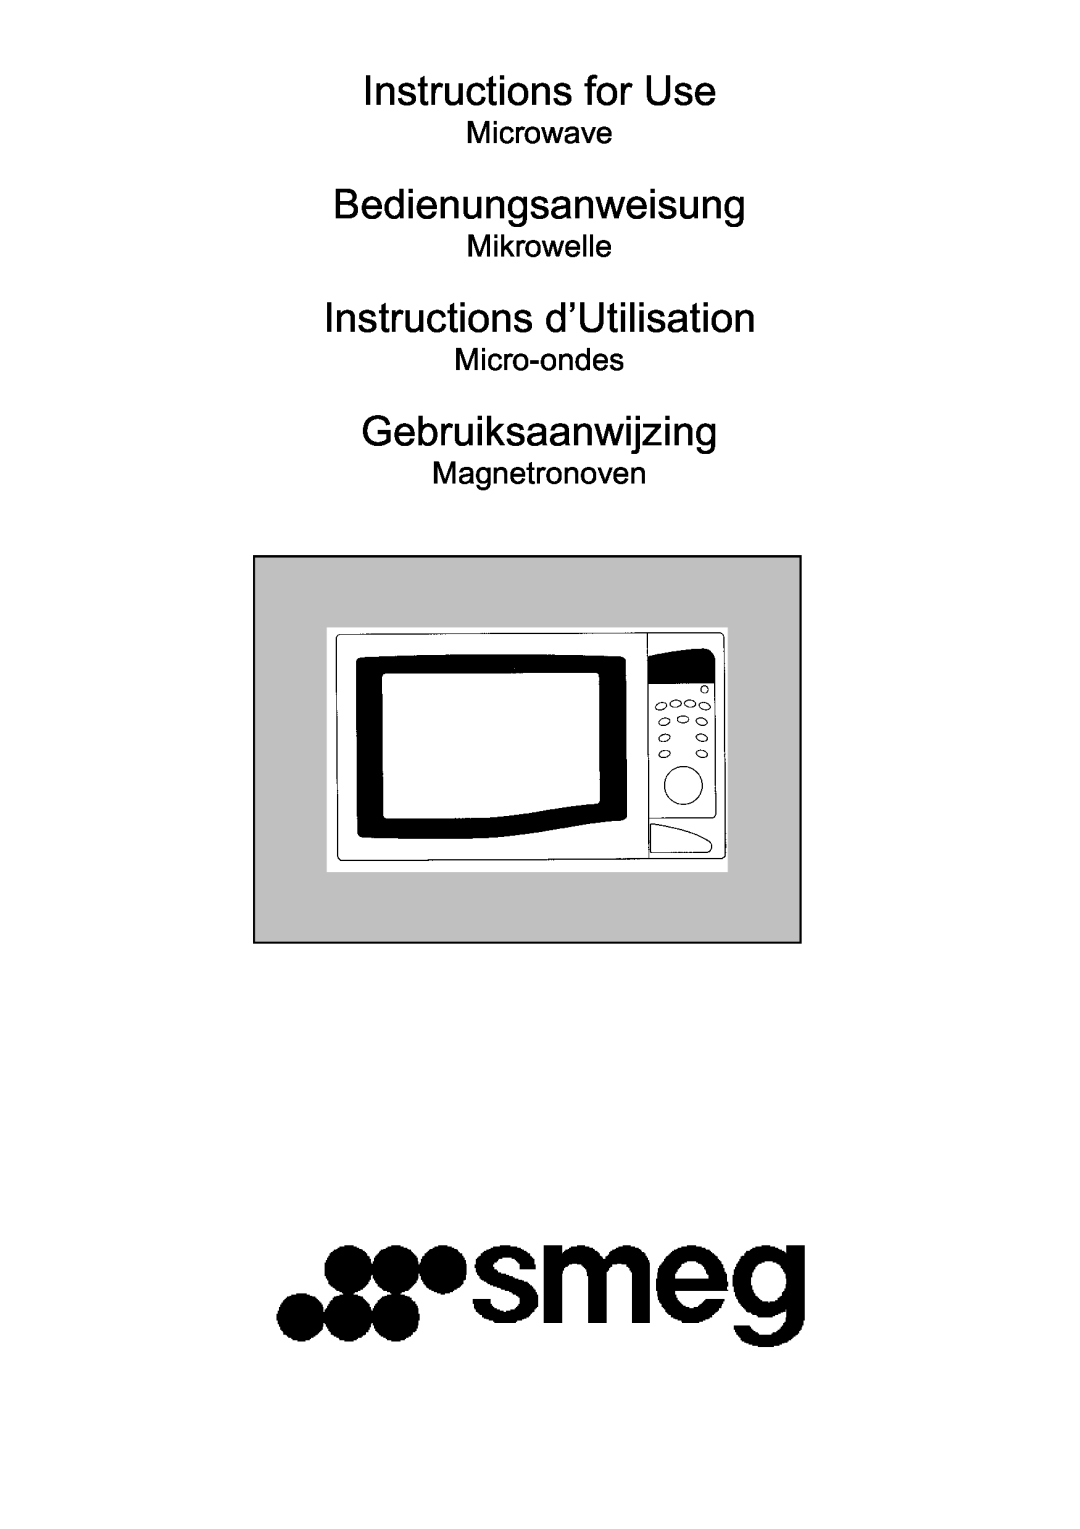 Smeg ME200B manual Instructions for Use, Bedienungsanweisung, Instructions d’Utilisation, Gebruiksaanwijzing, Microwave 